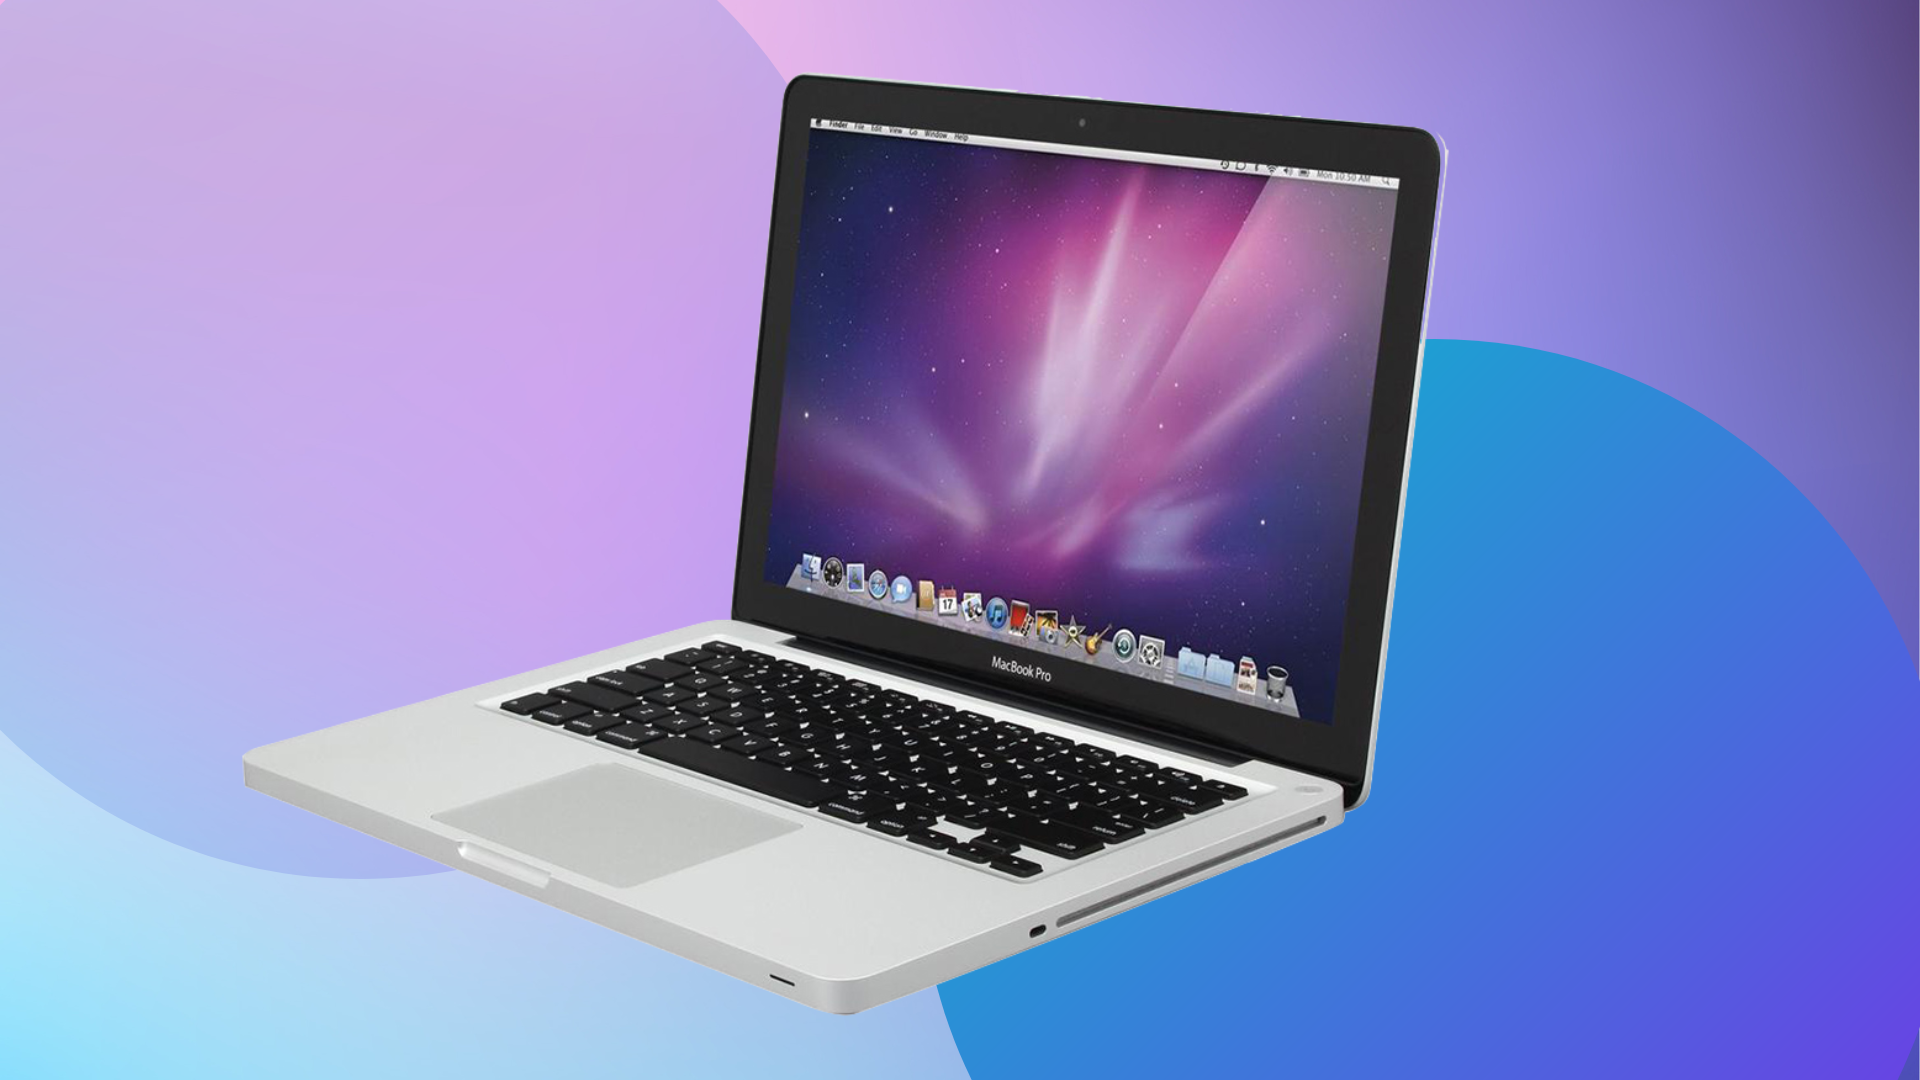 MacBook pro in silver